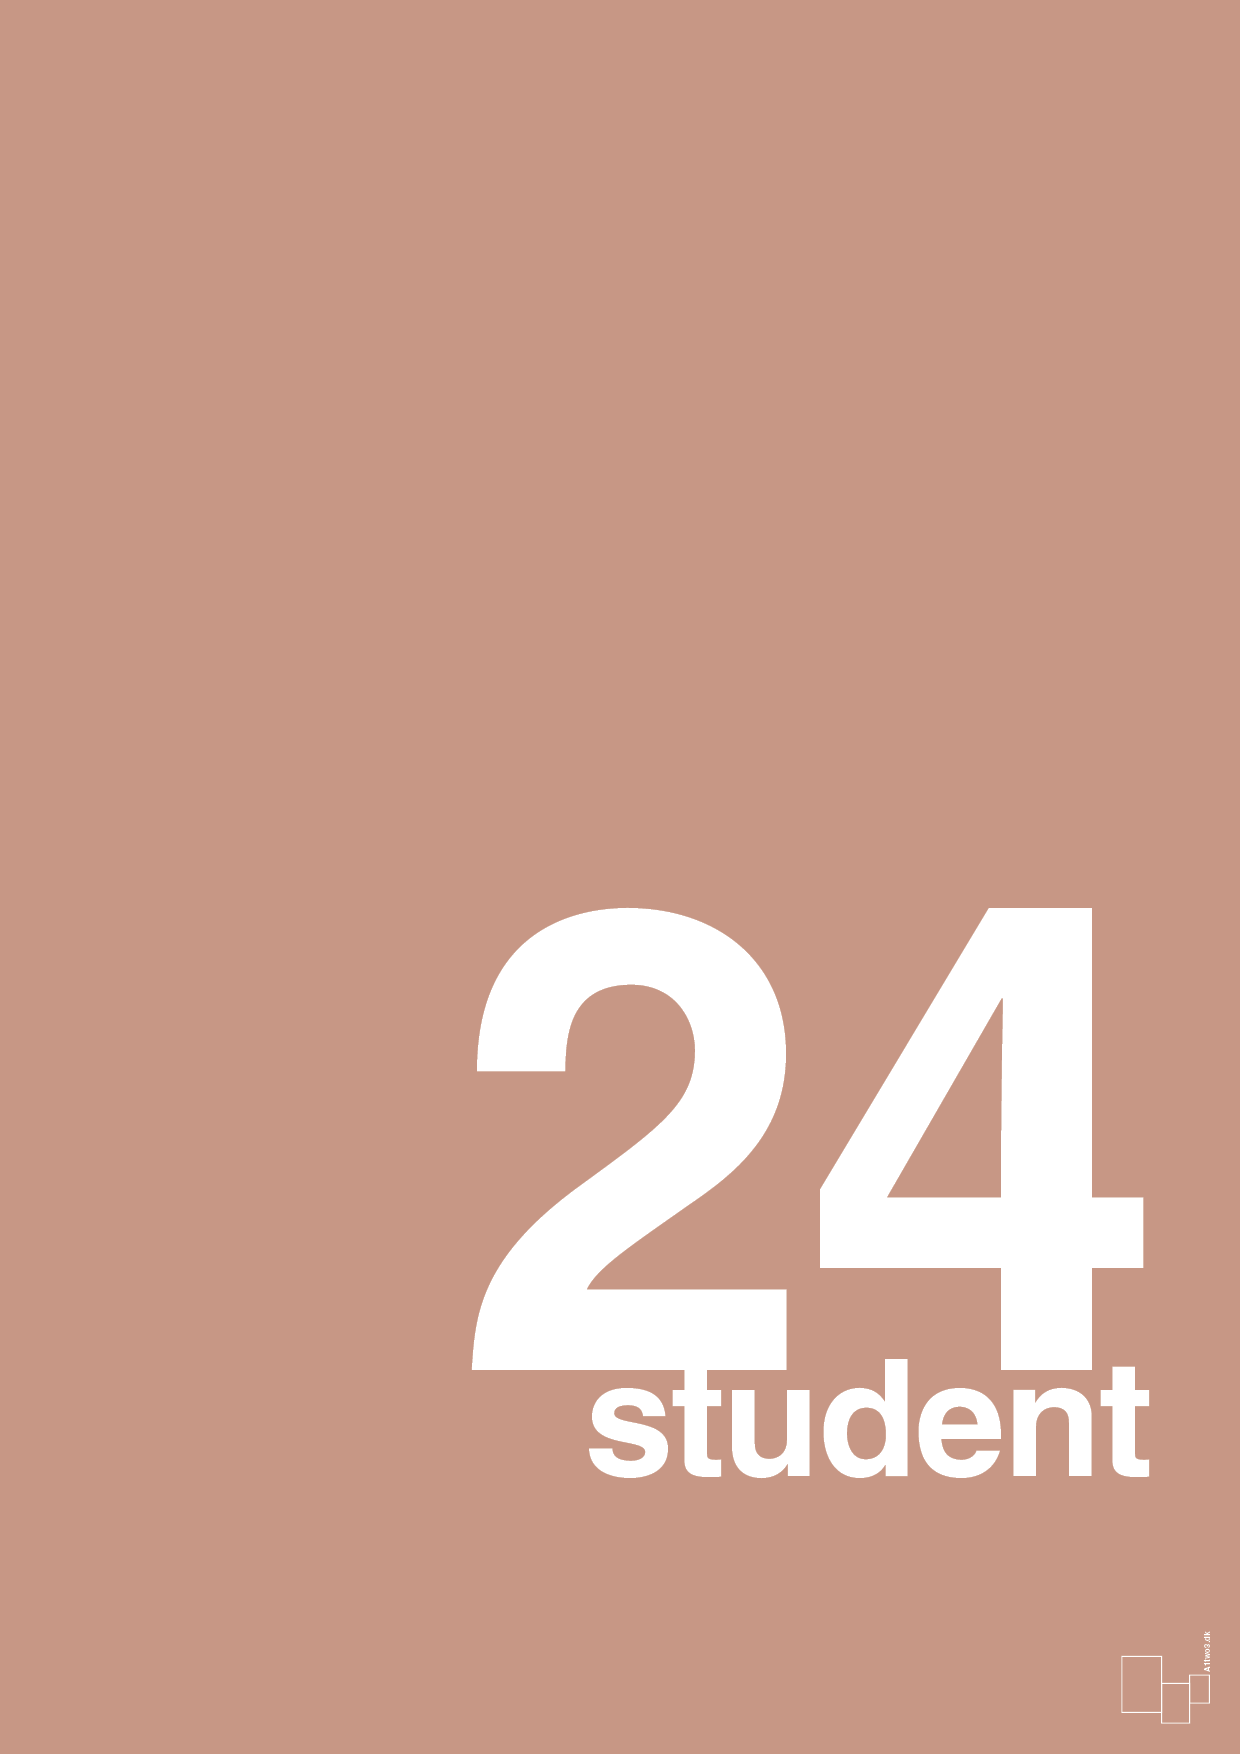 plakat: student 2024